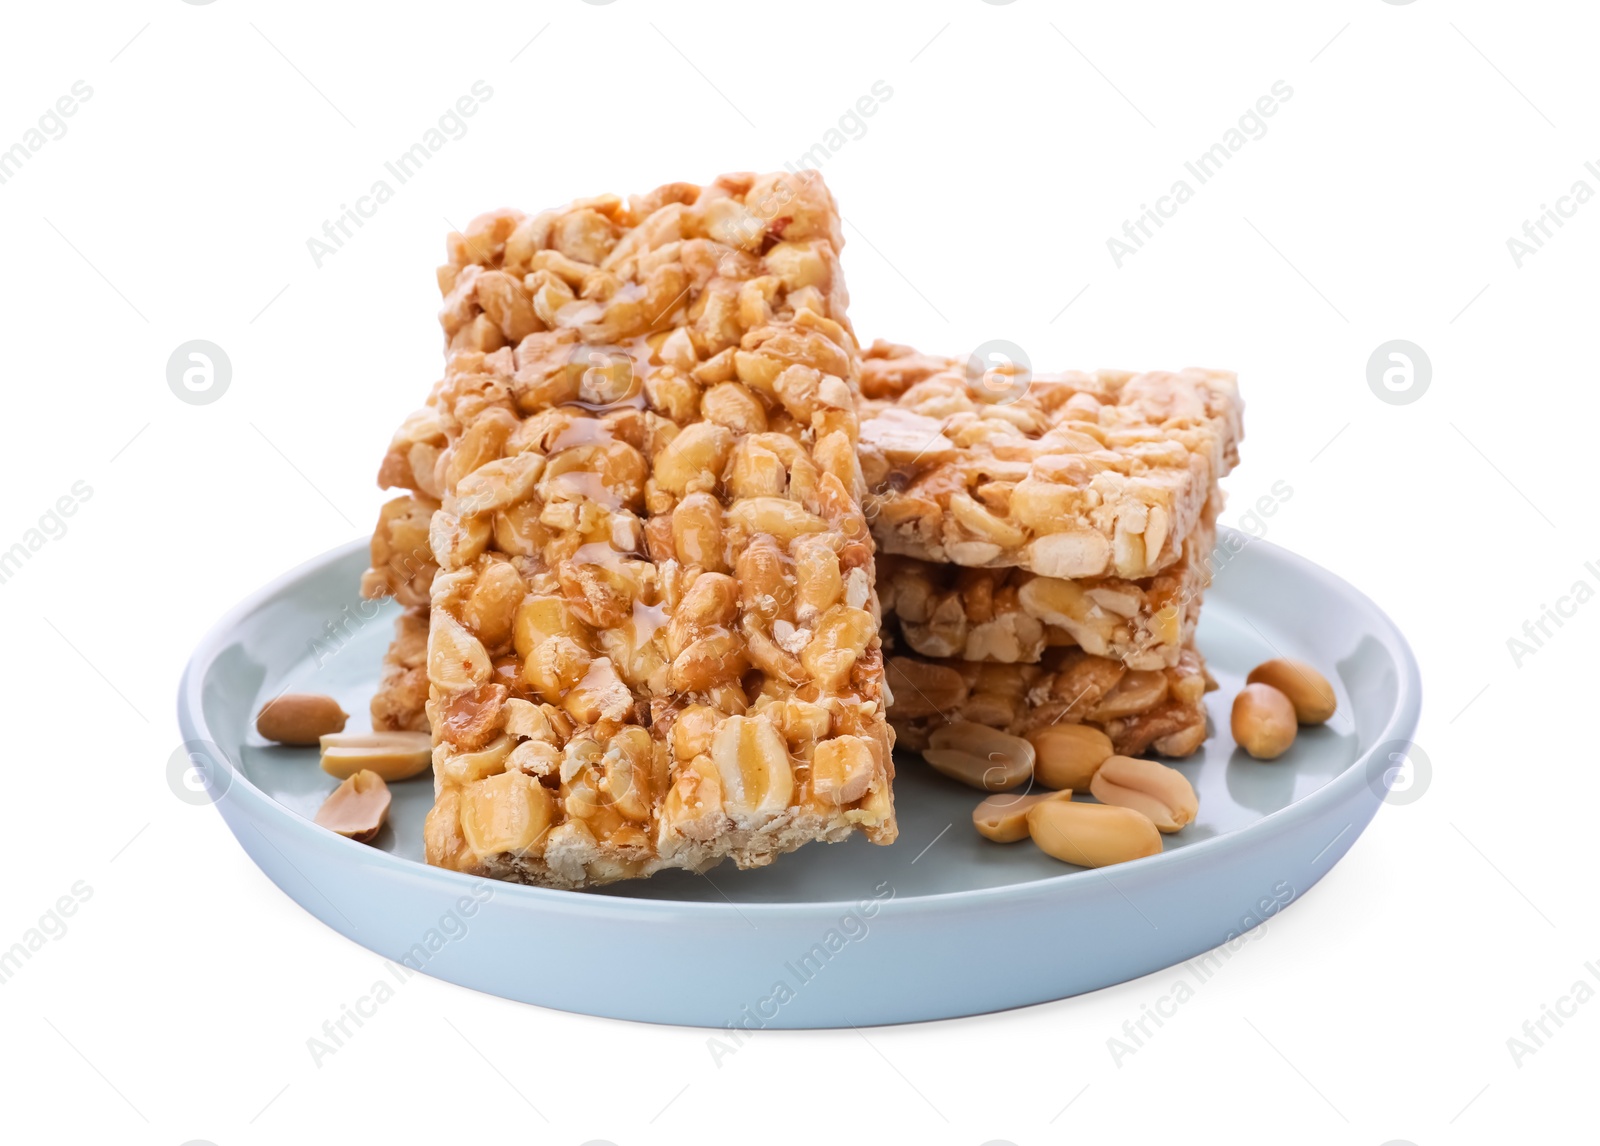 Photo of Plate with tasty kozinaki bars and peanuts isolated on white